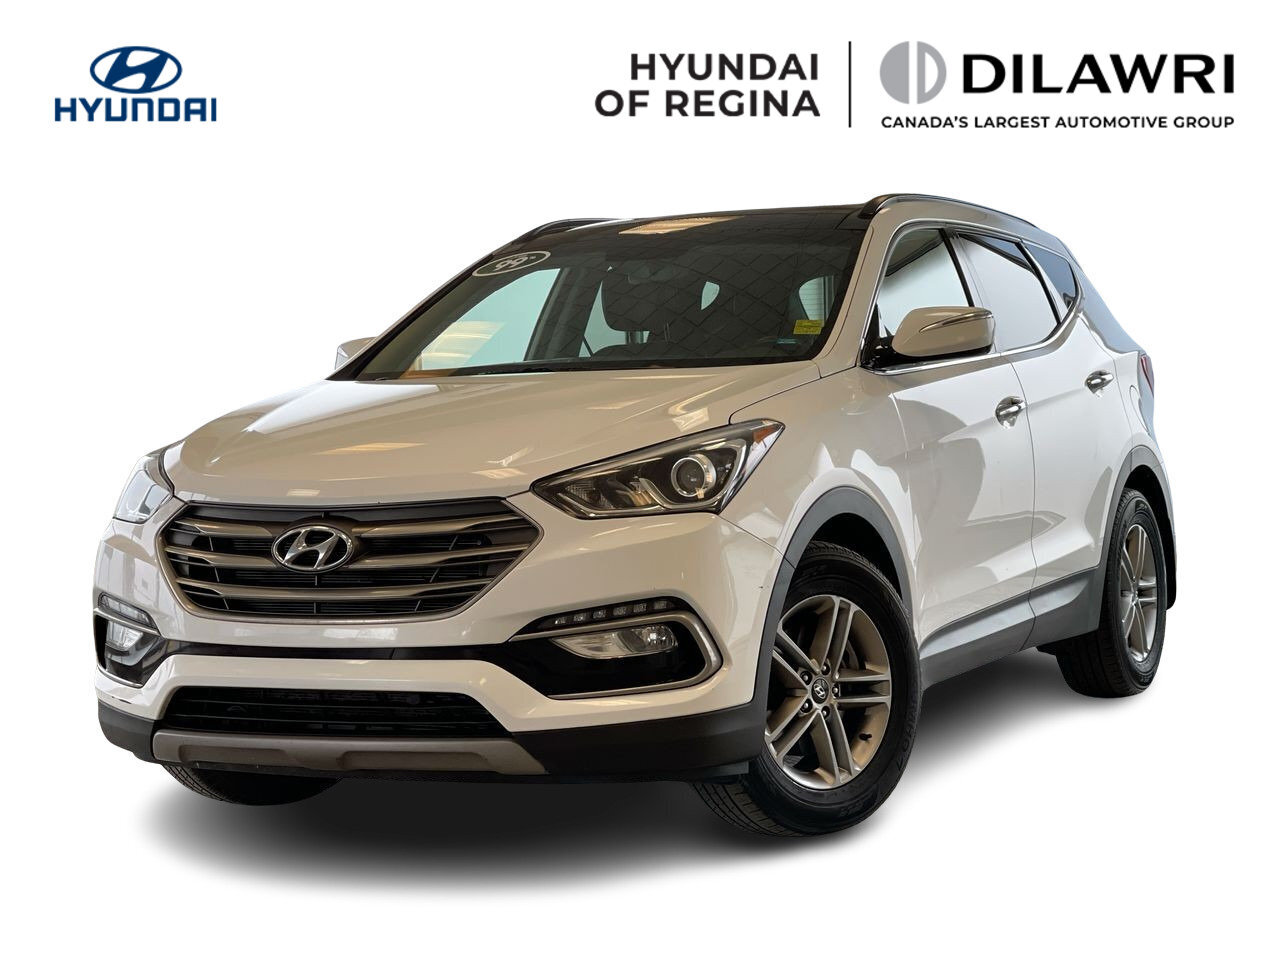 2017 Hyundai Santa Fe Sport AWD 2.4L Luxury Navigation, Leather, Local Trade, 